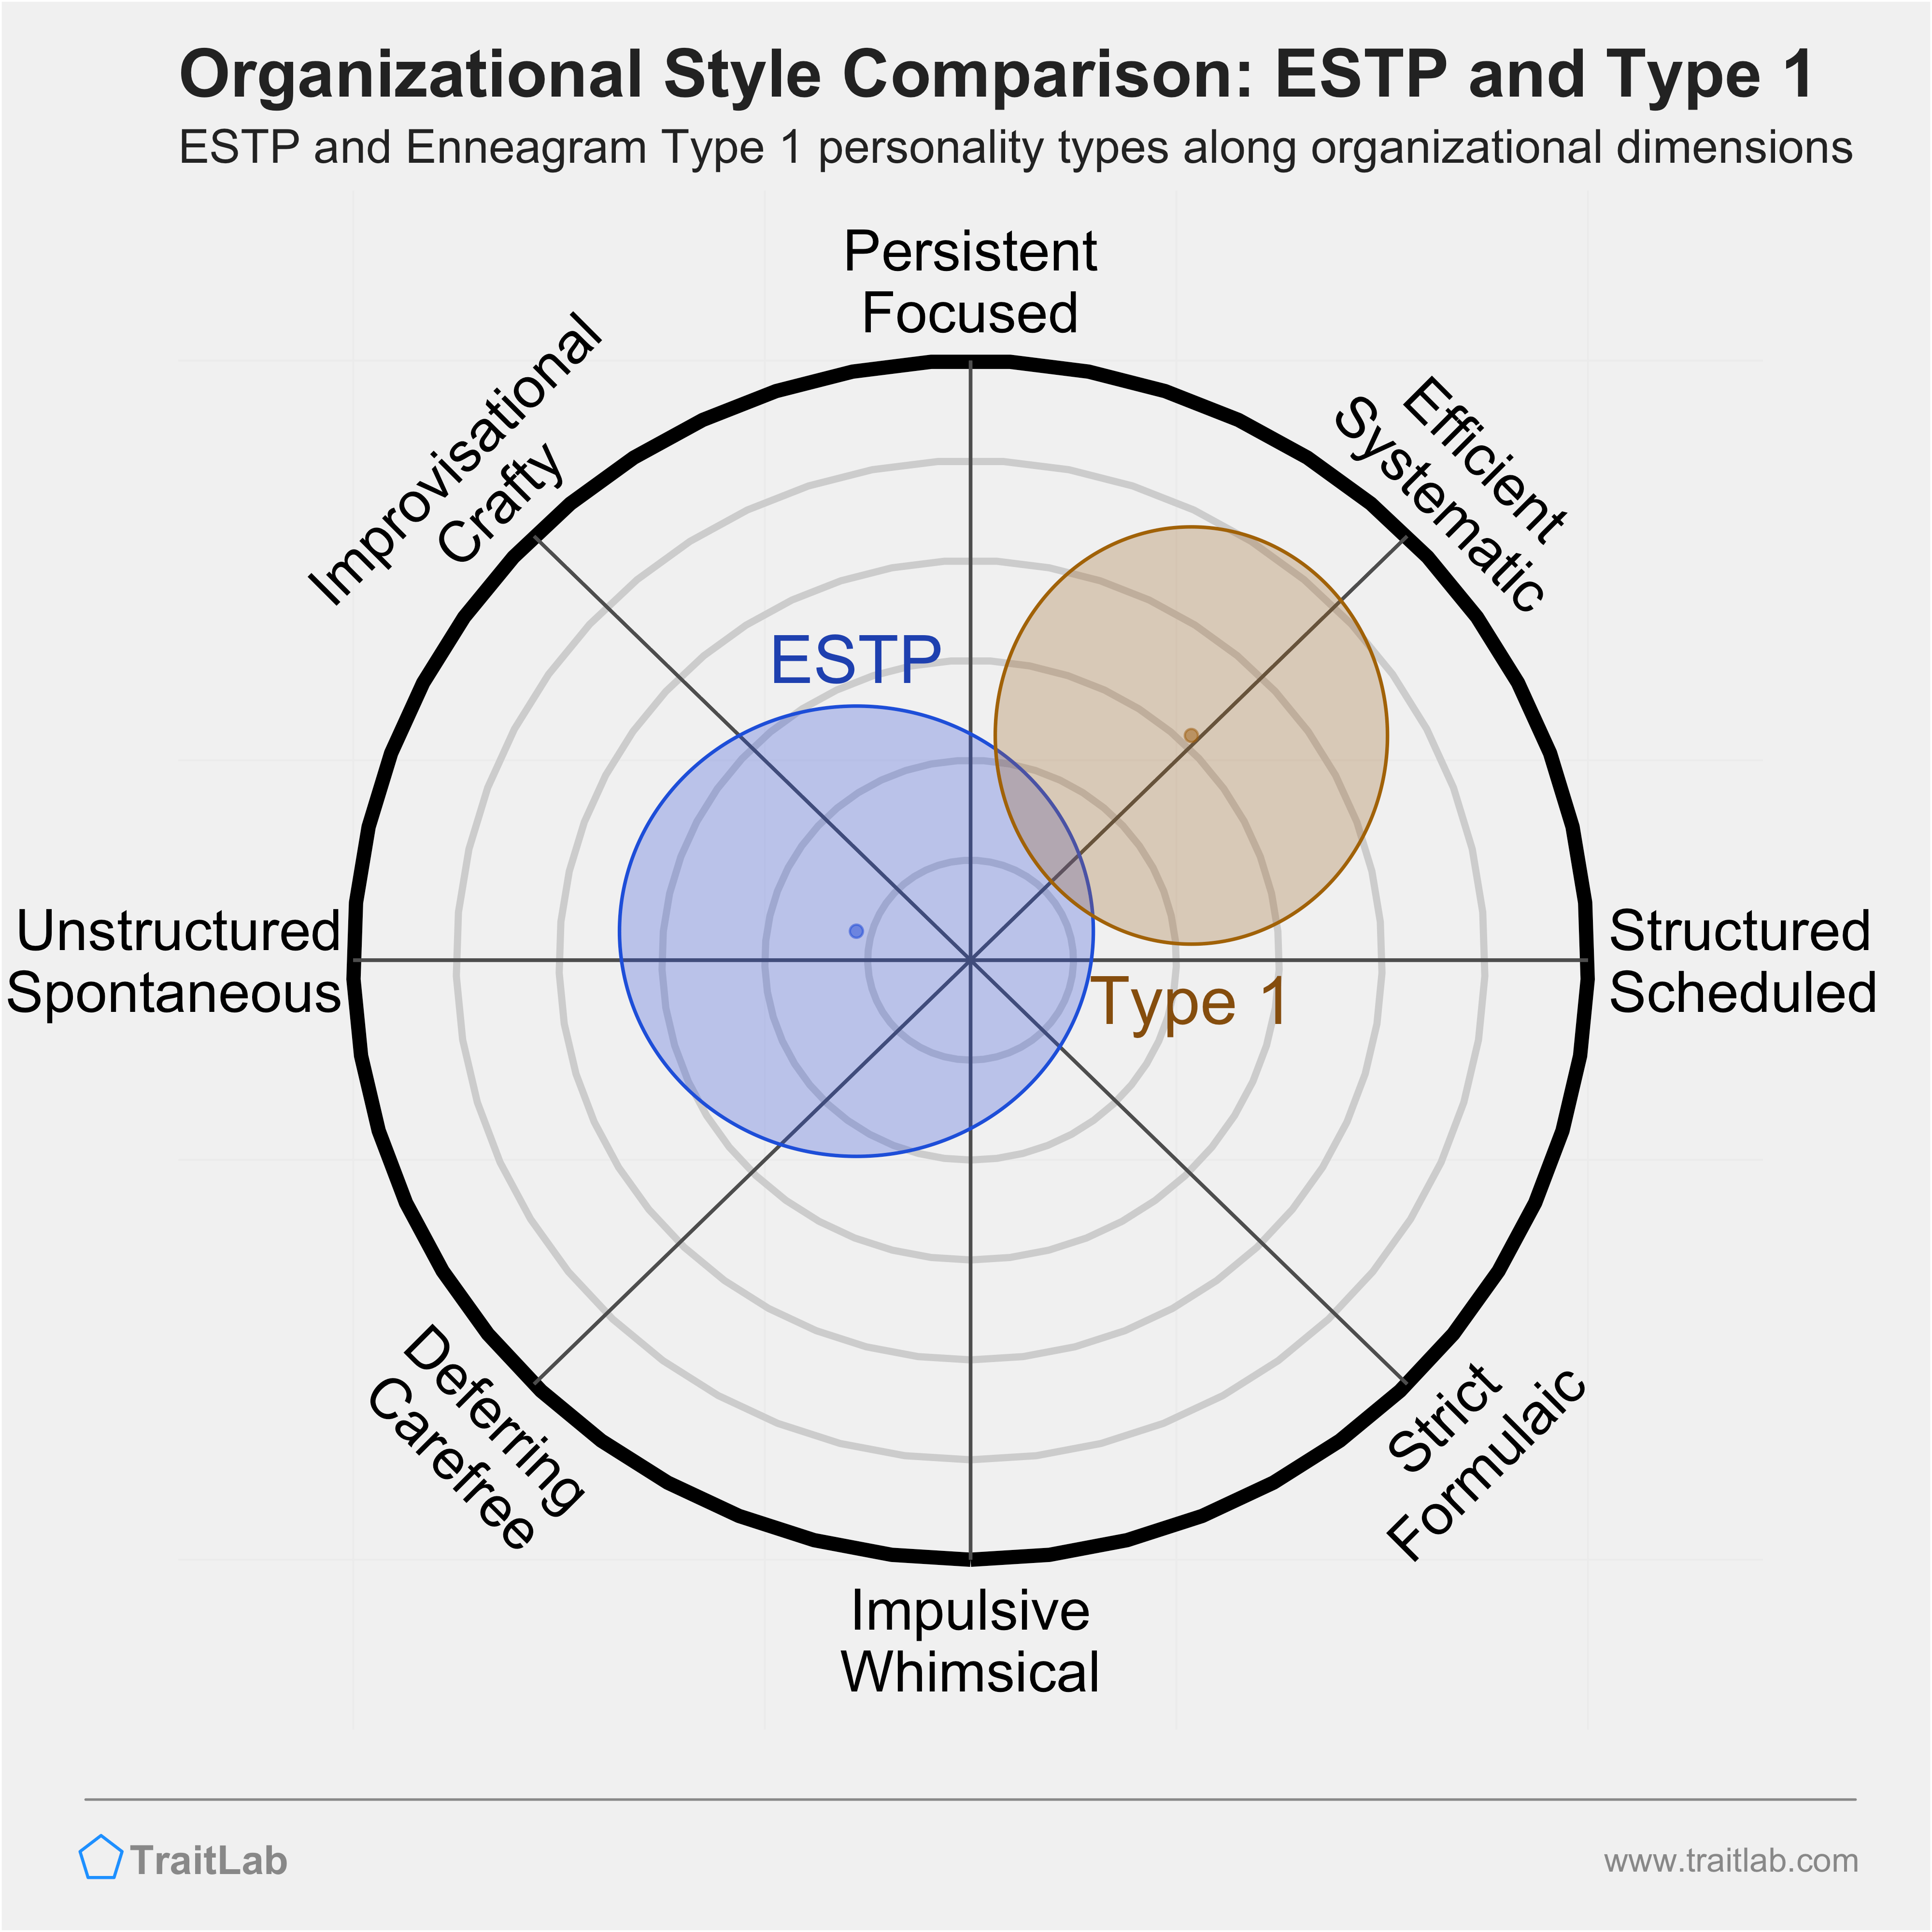 ESTP and Type 1 comparison across organizational dimensions